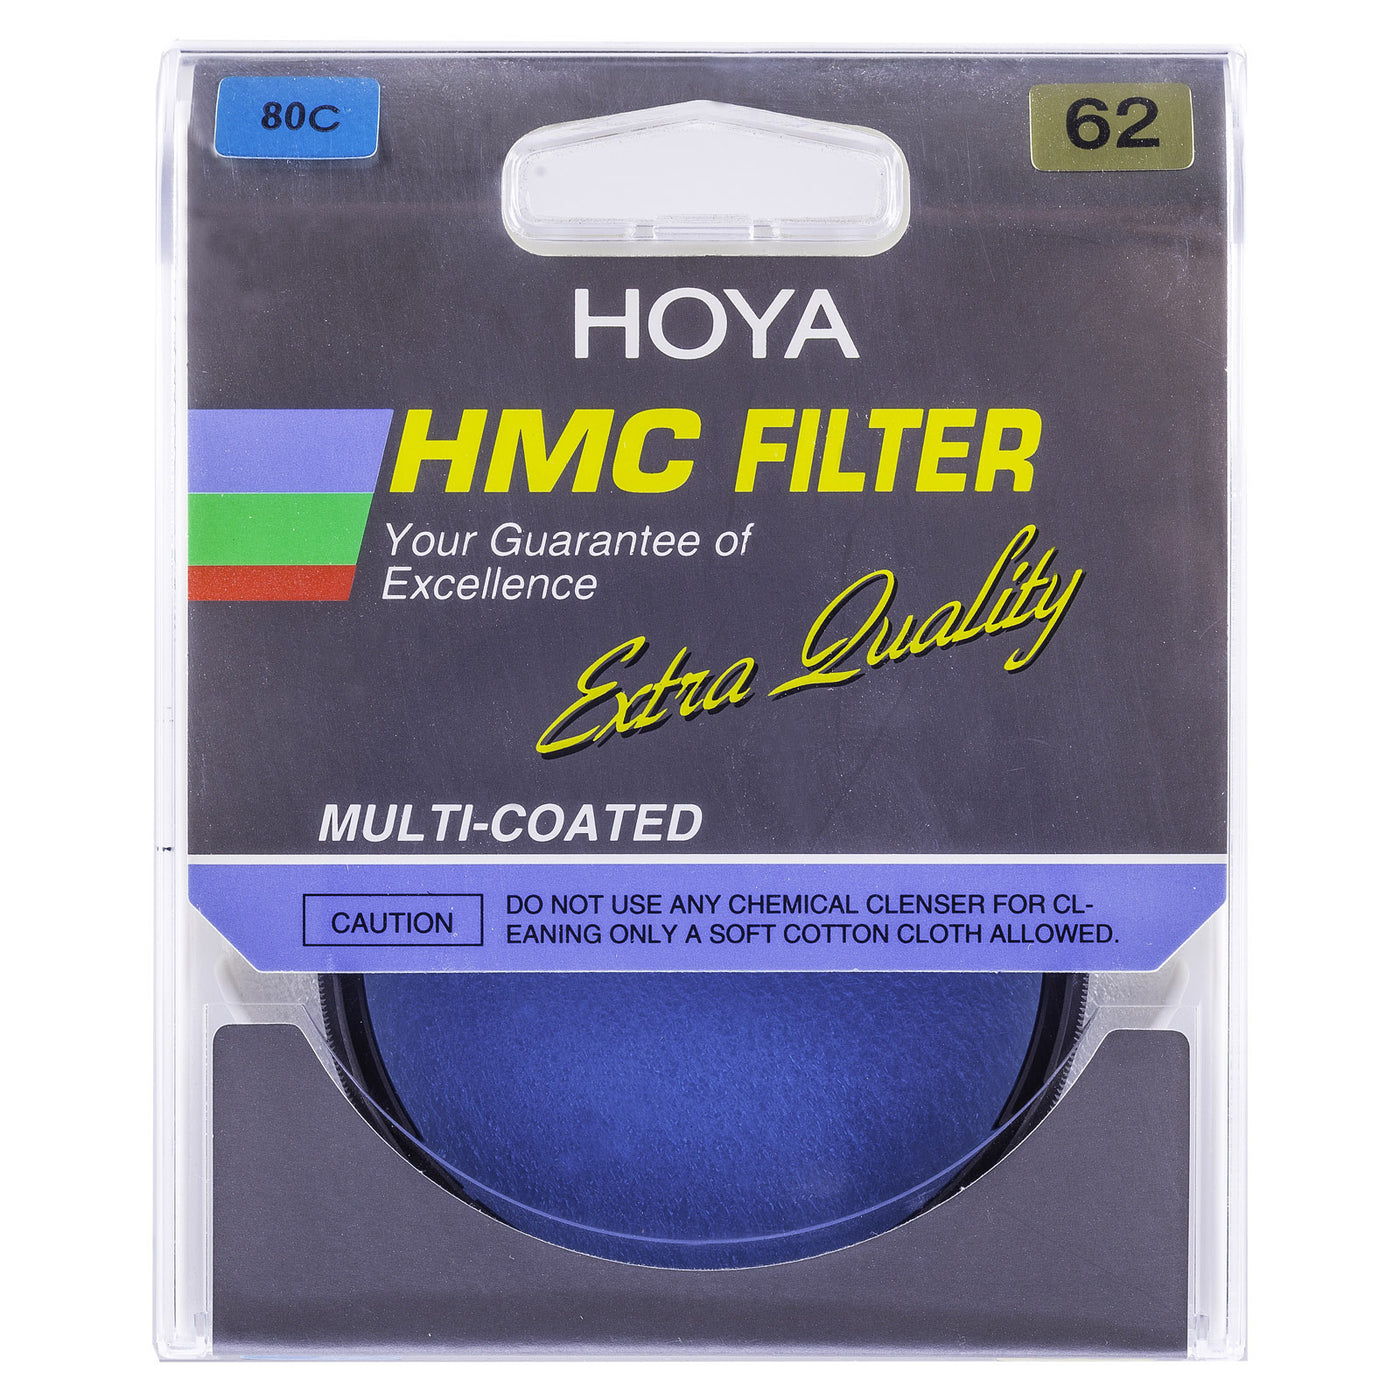 Hoya A 80C Filter Box